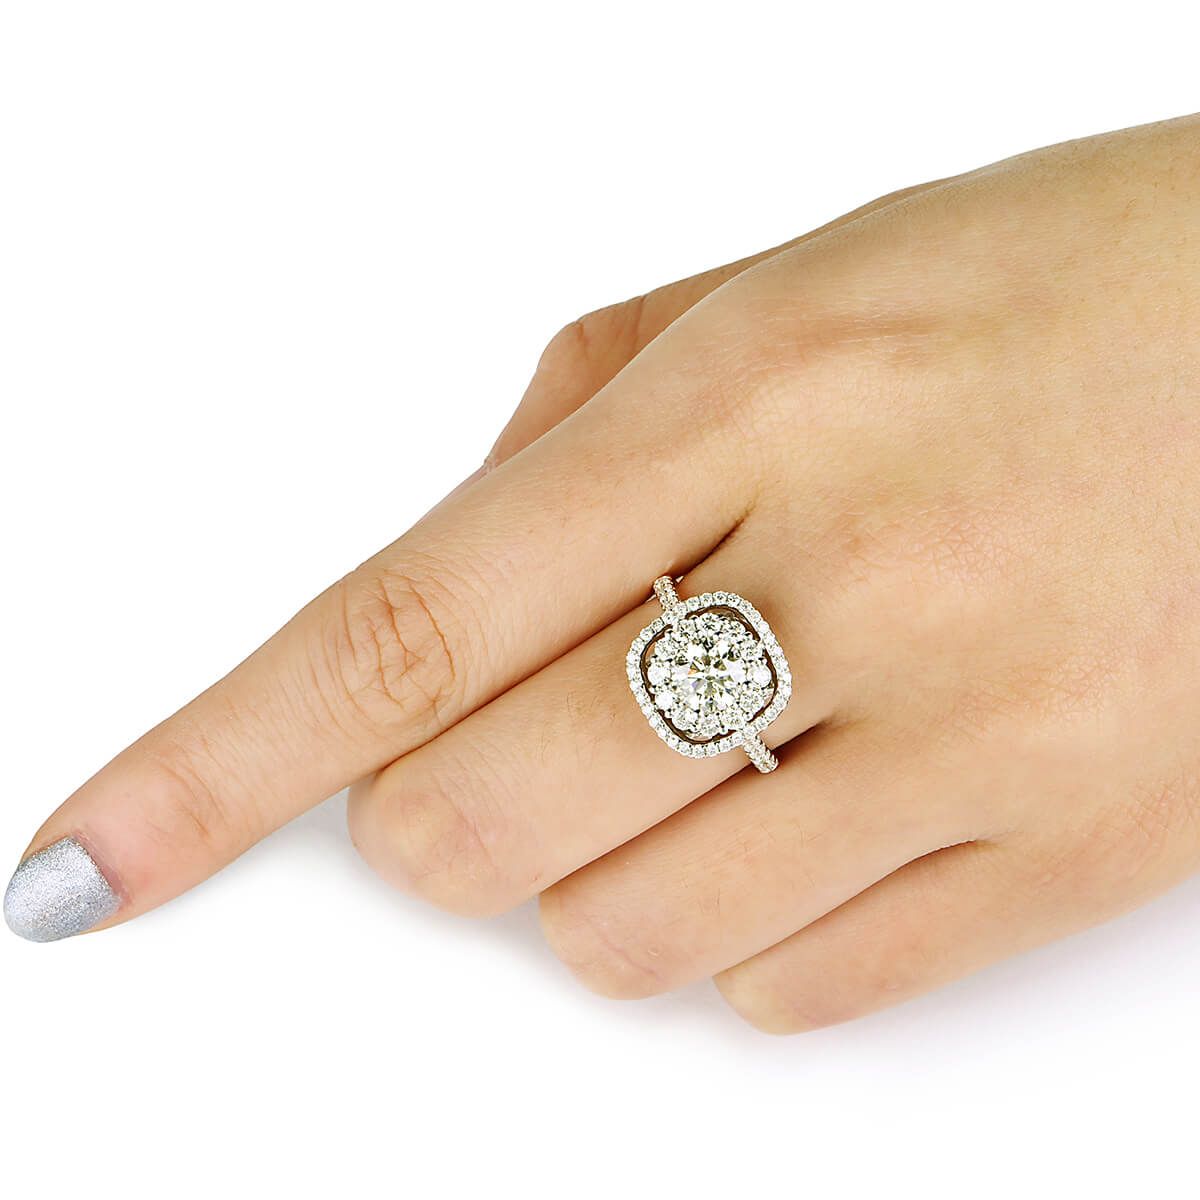  White Diamond Ring, 2.15 Ct. TW, Round shape, EGL IL Certified, EGLOO10470173